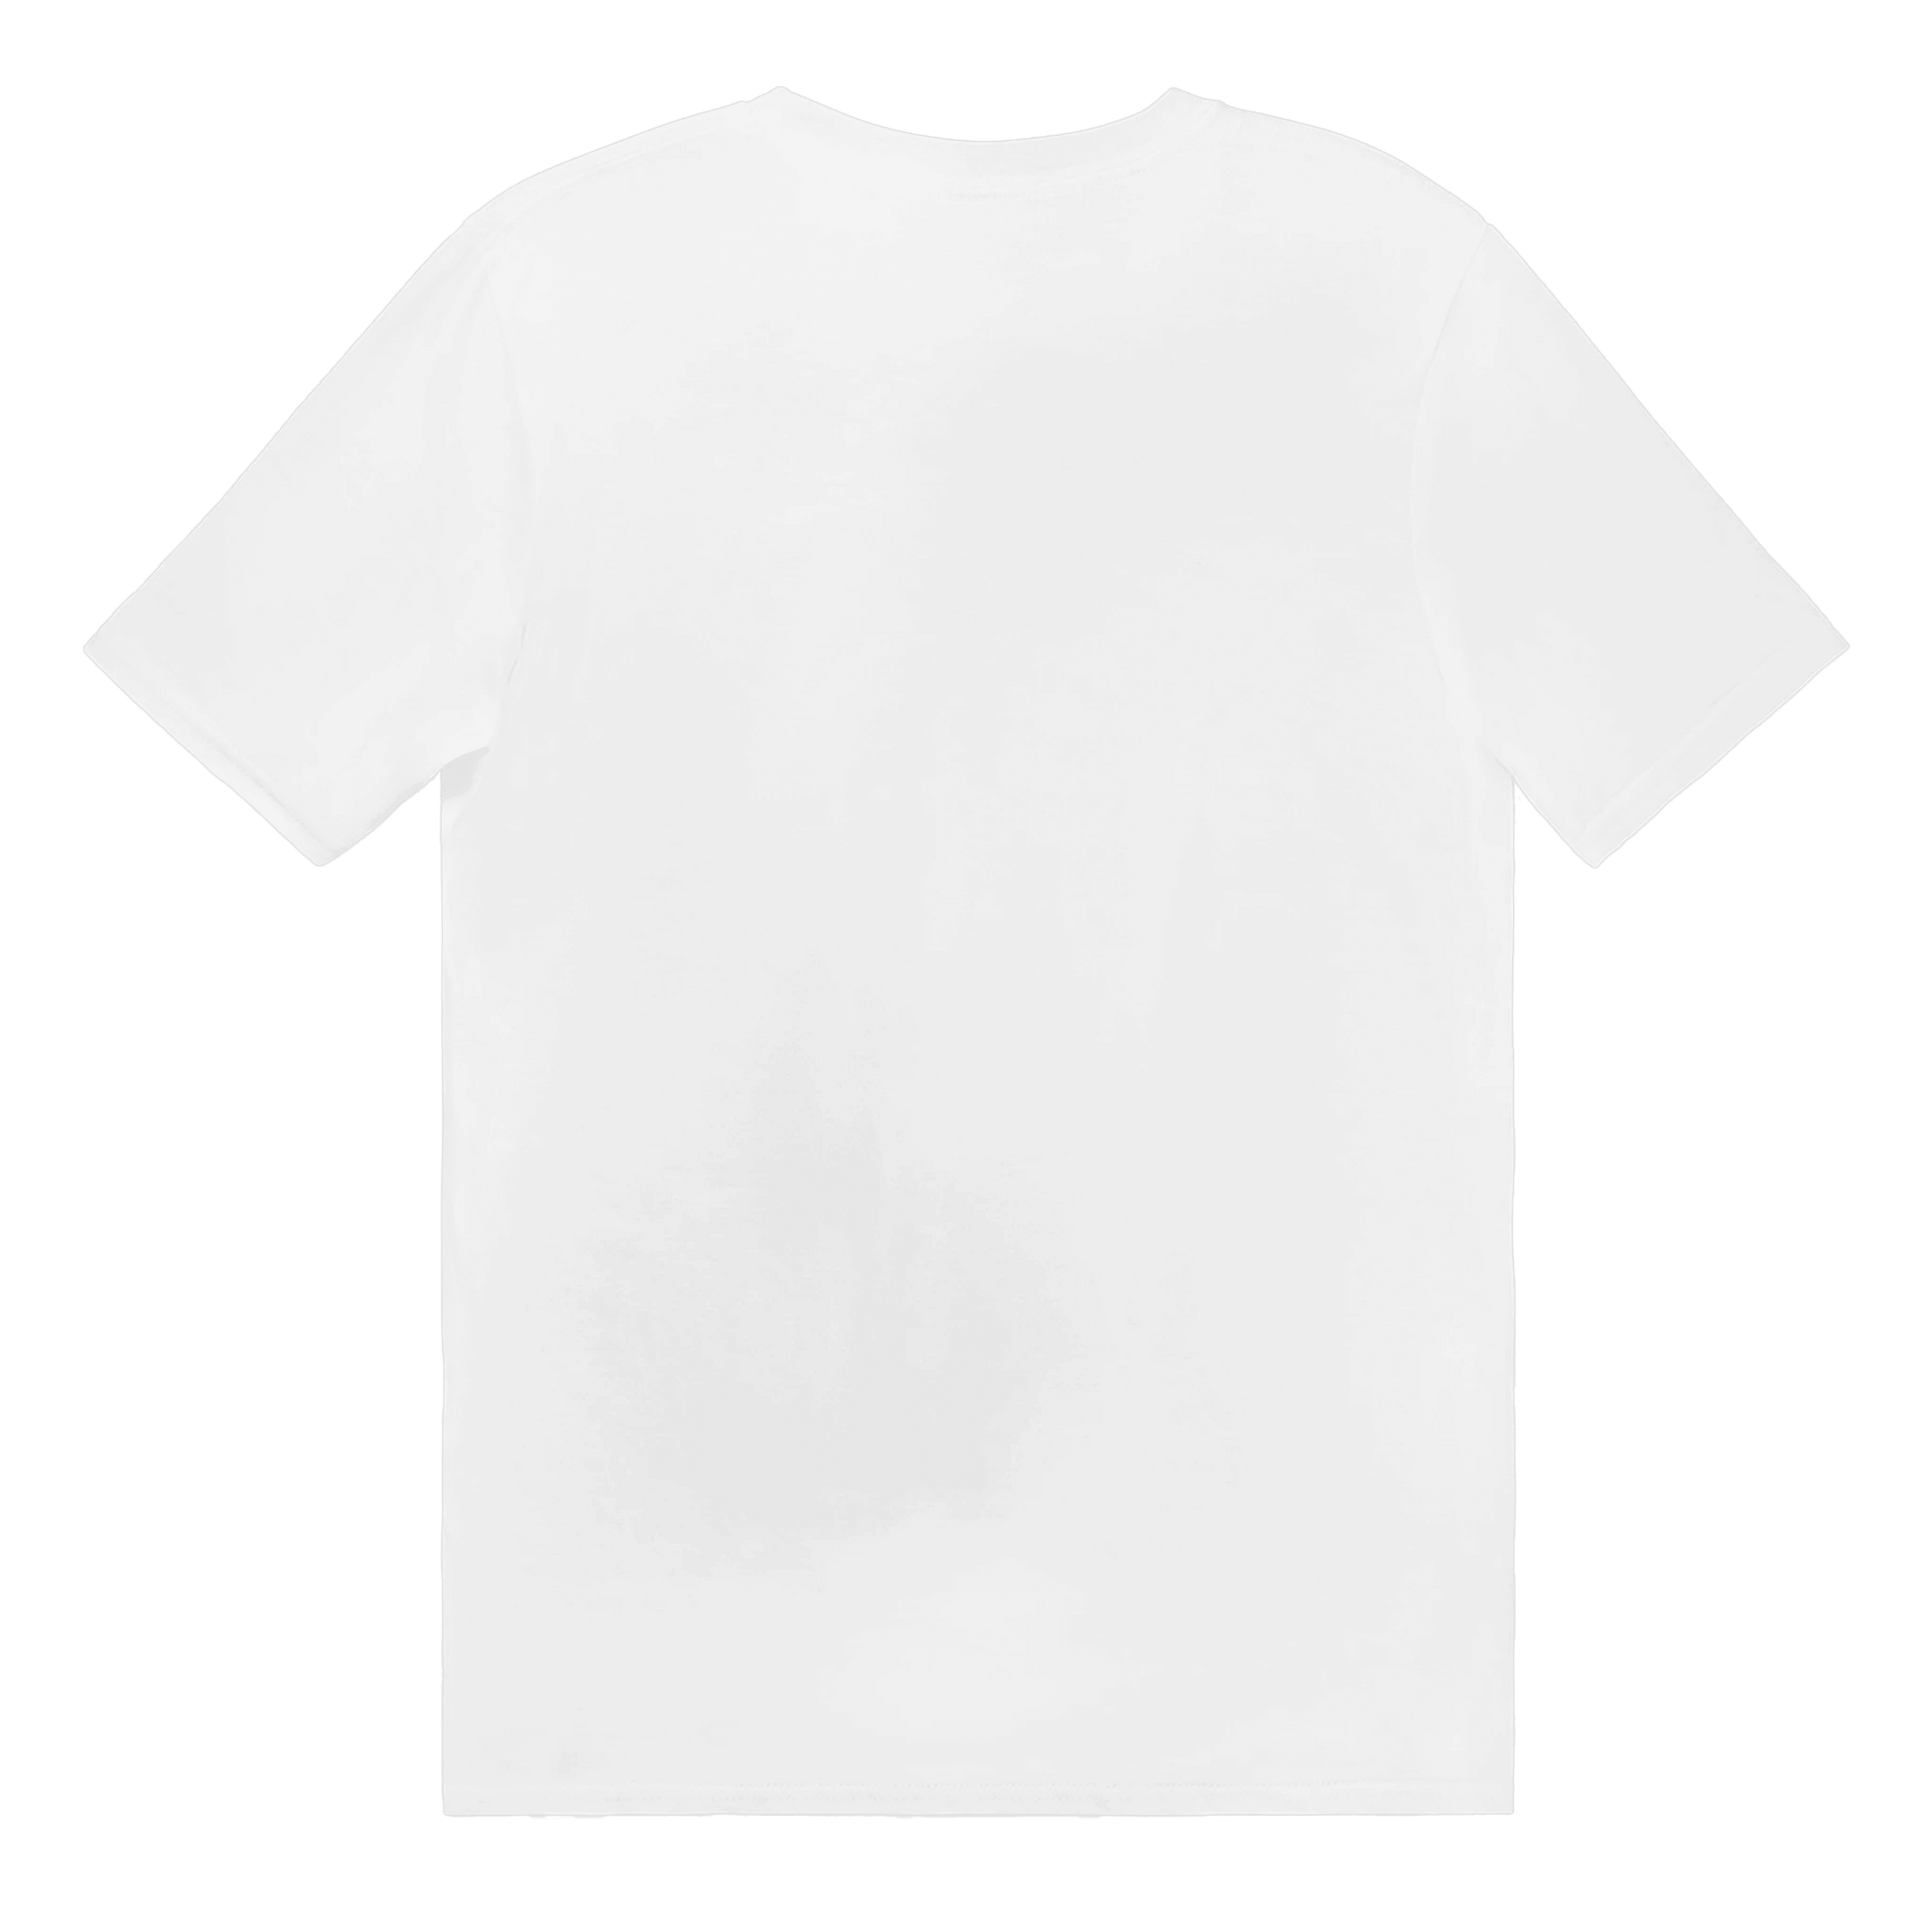 Varmboga - T-shirt 